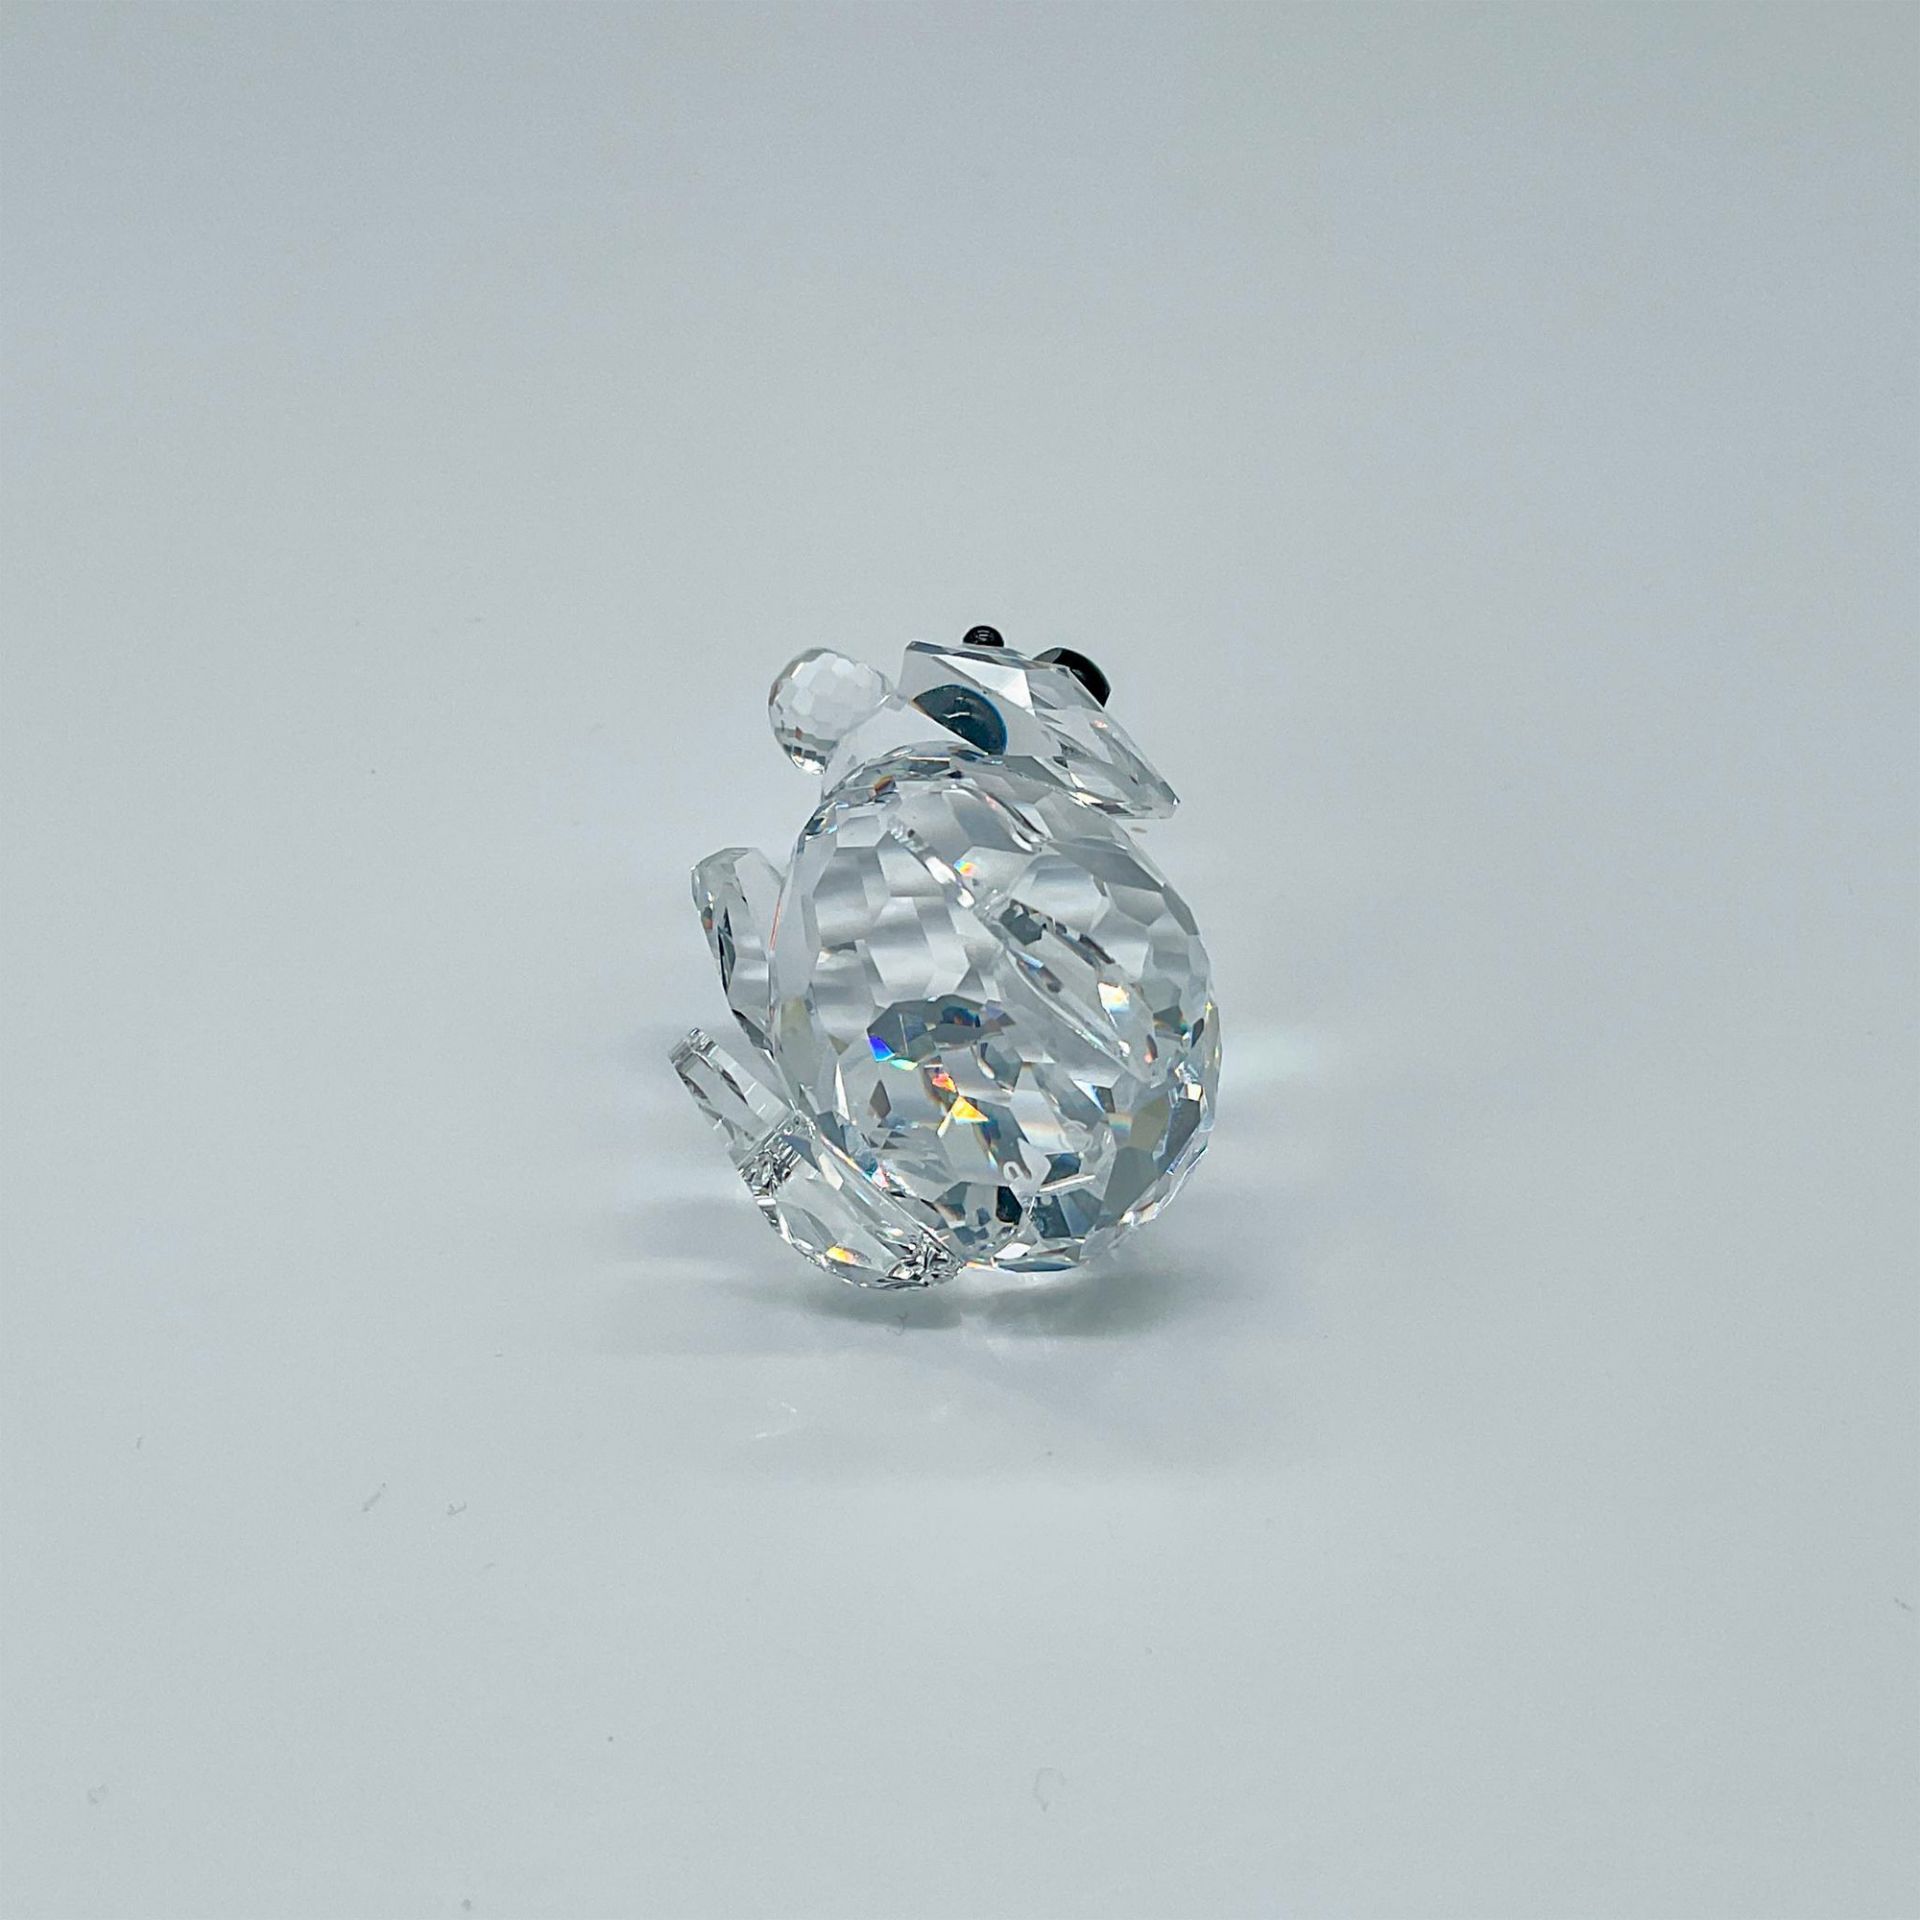 Swarovski Crystal Figurine, Mini Koala - Image 3 of 4